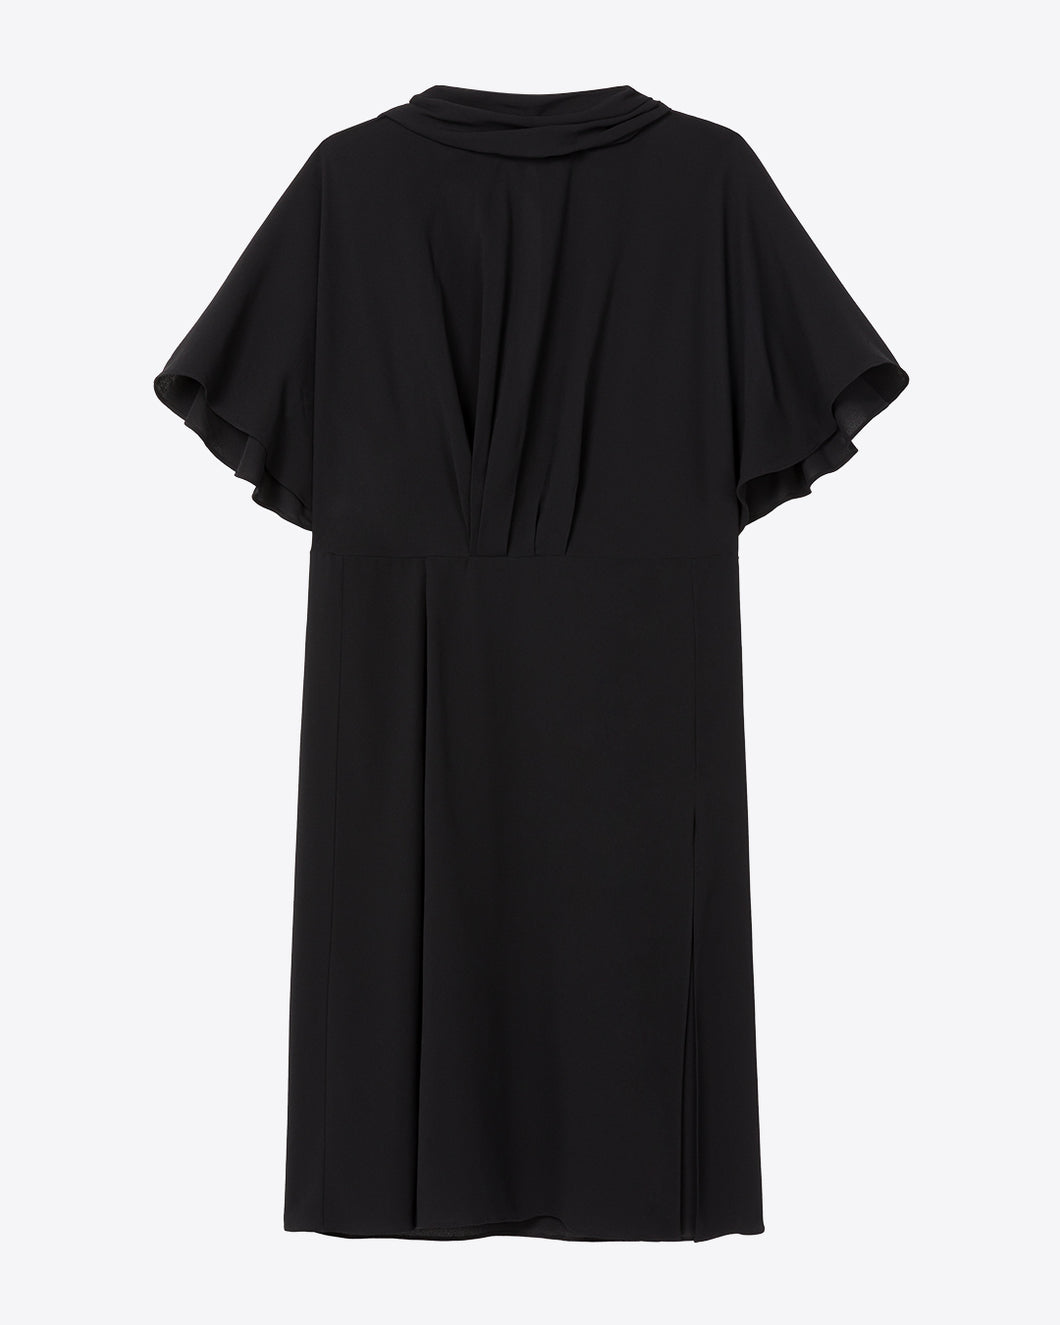 CHRISSY DRESS - BLACK